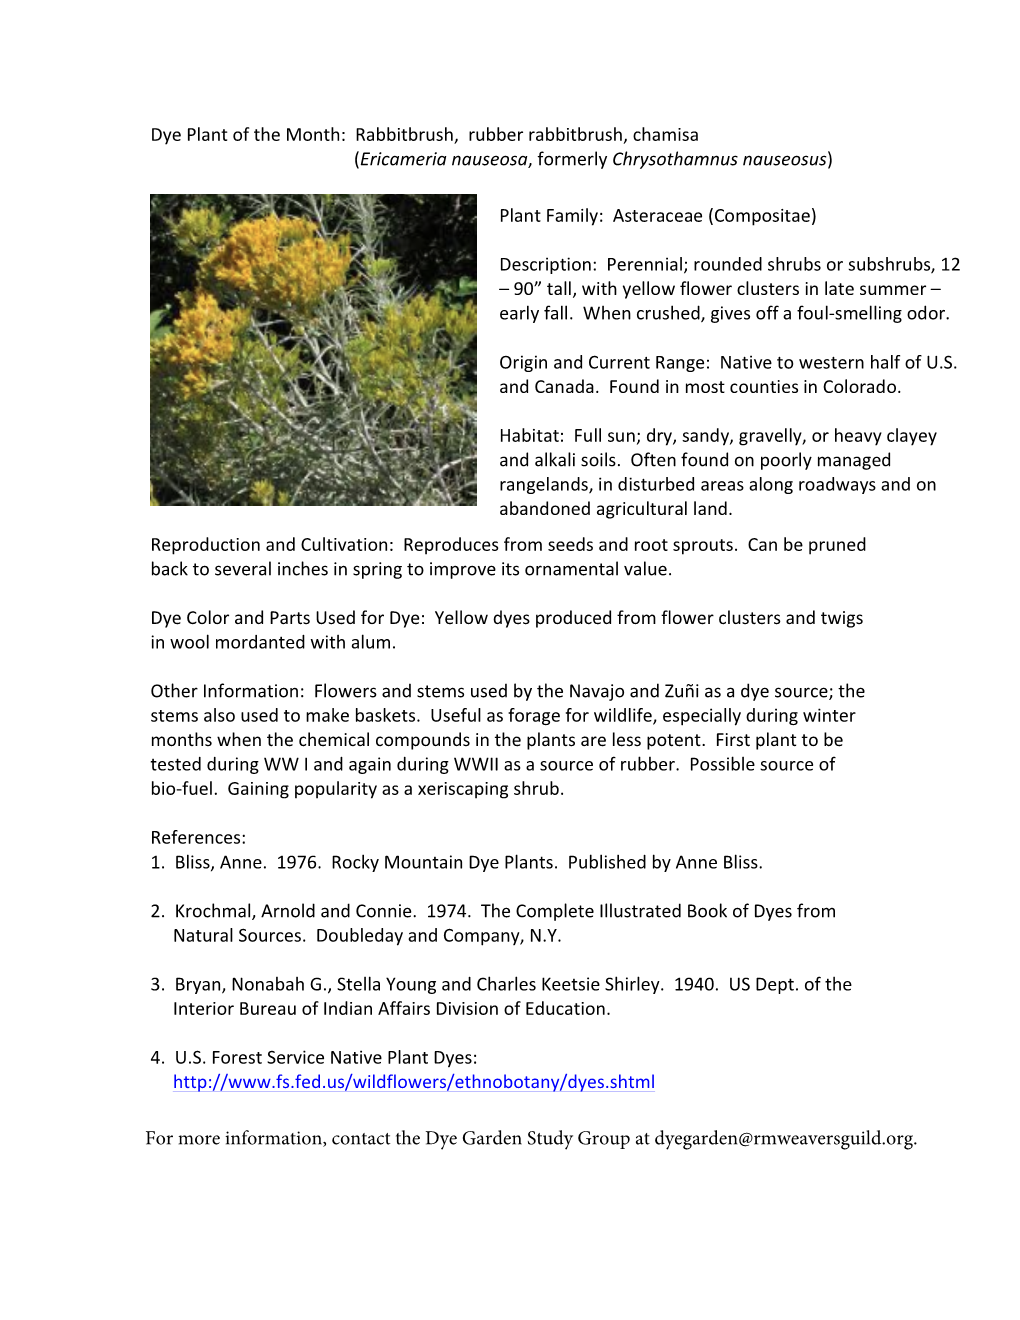 Dye Plant of the Month: Rabbitbrush, Rubber Rabbitbrush, Chamisa (Ericameria Nauseosa, Formerly Chrysothamnus Nauseosus)